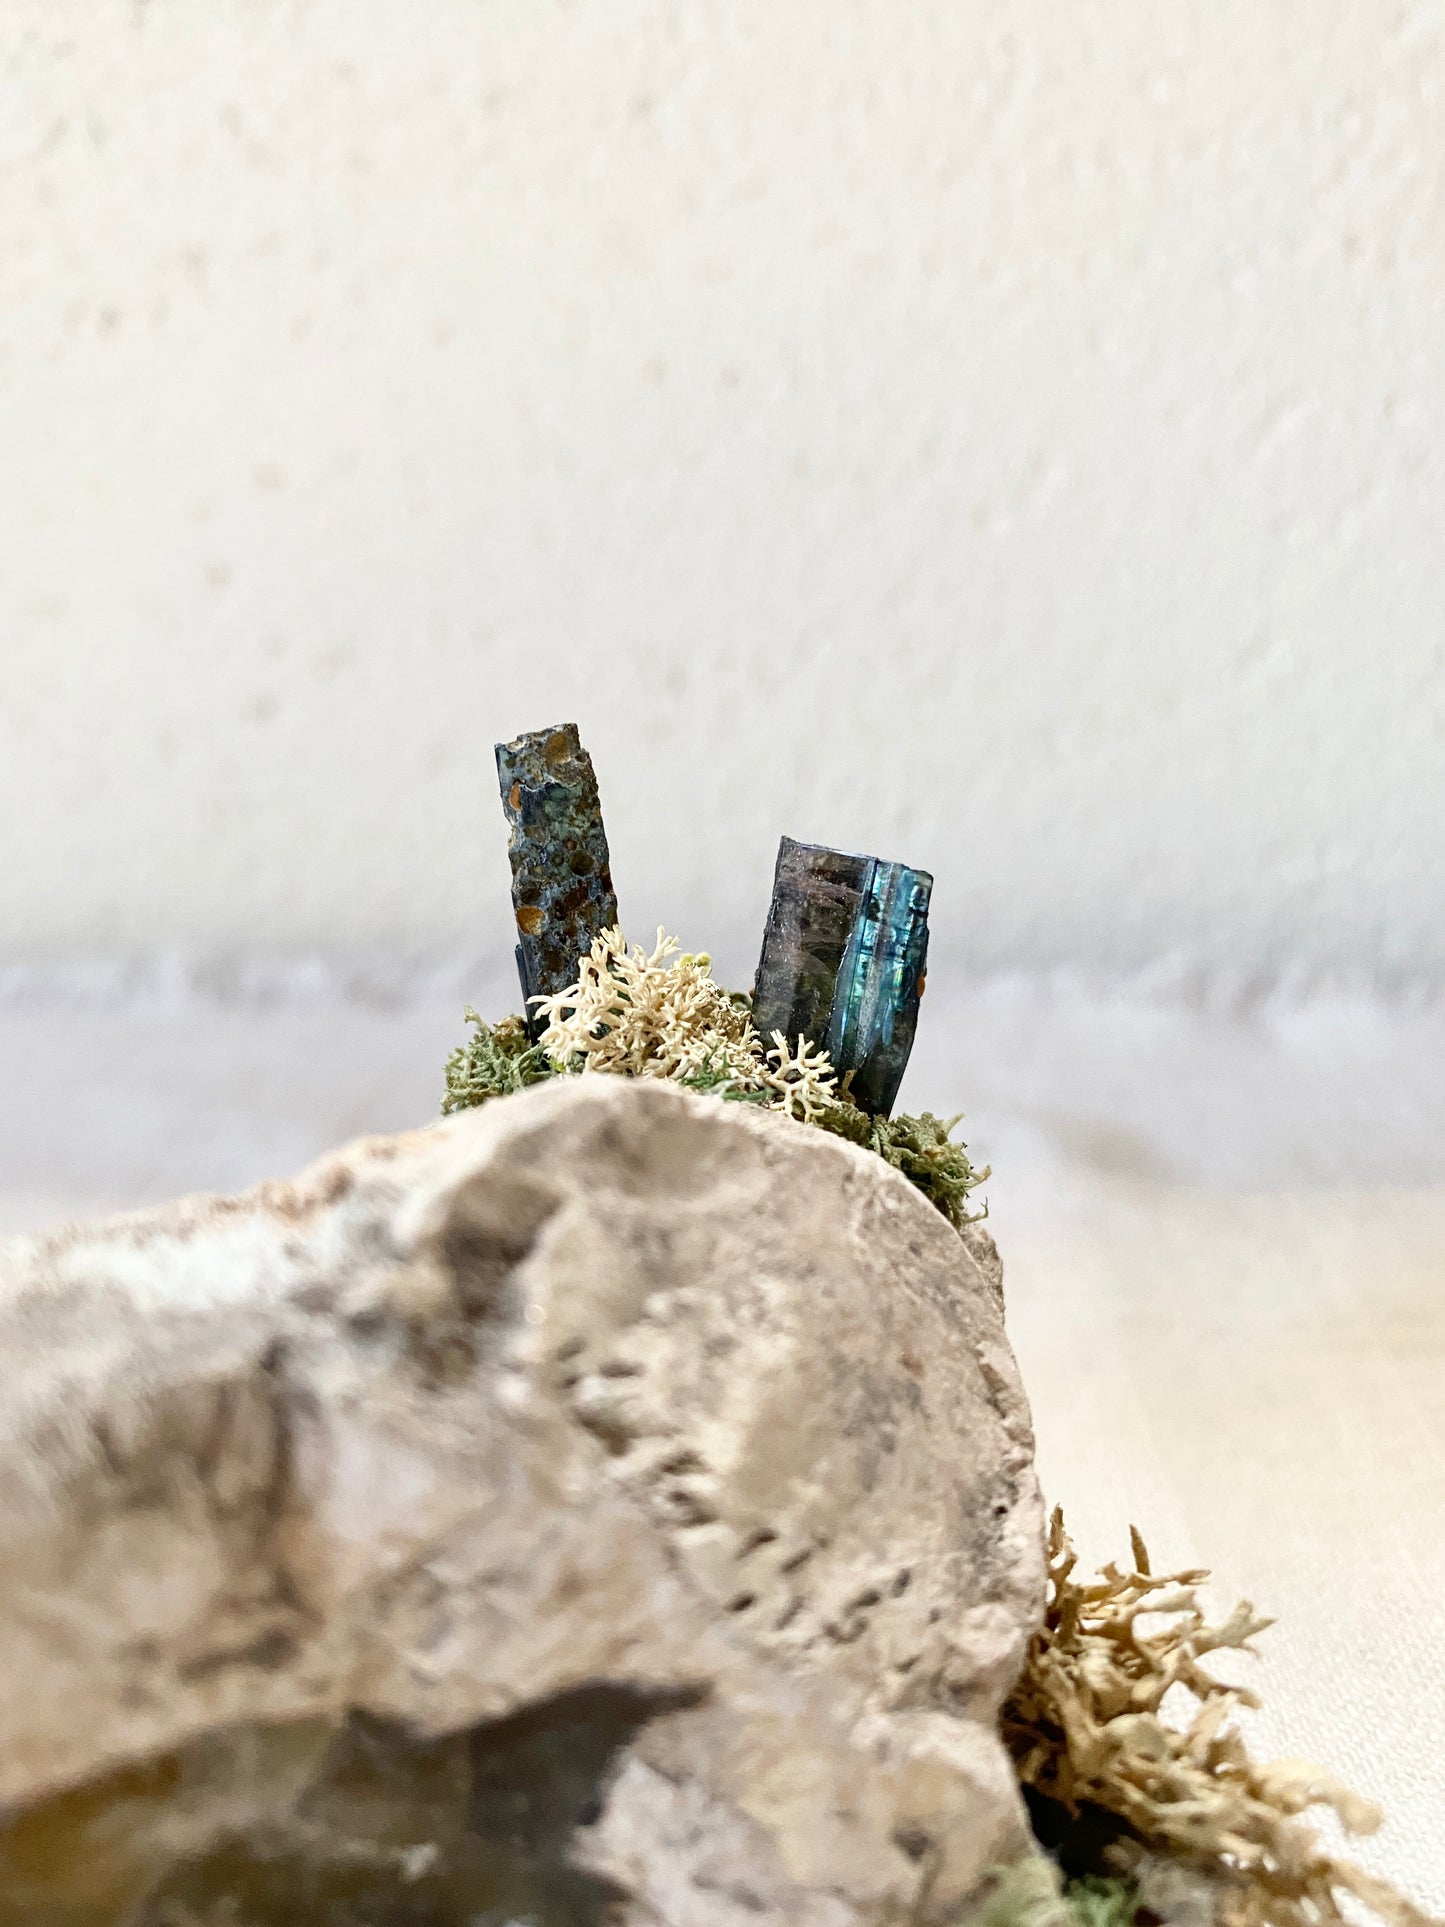 Fairy Rock ~ Thunderegg and Vivianite Crystal Sculpture Inspired Home Decor